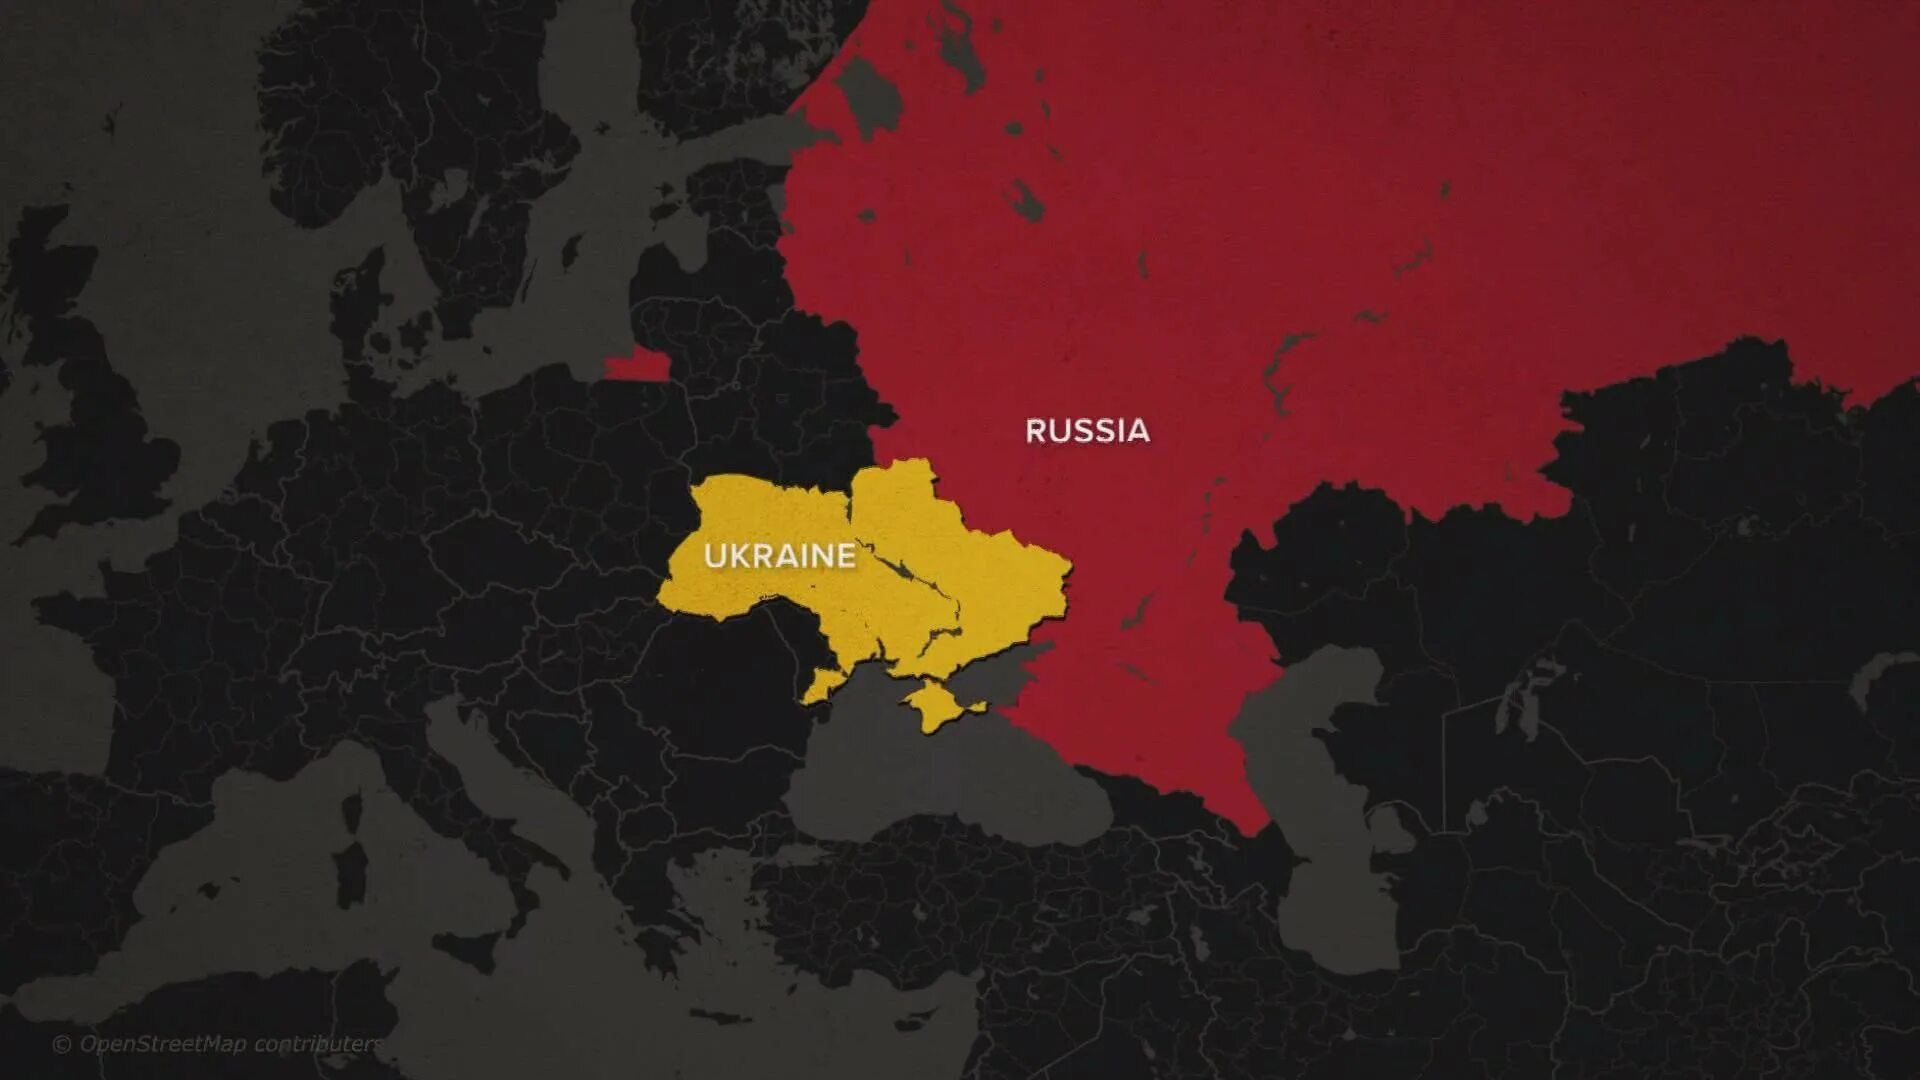 Russia and Ukraine Map gif. Рашн инвасион карта. June 2023 Russian Ukraine Invasion Map. Ukraine Russia Blood minimalism.